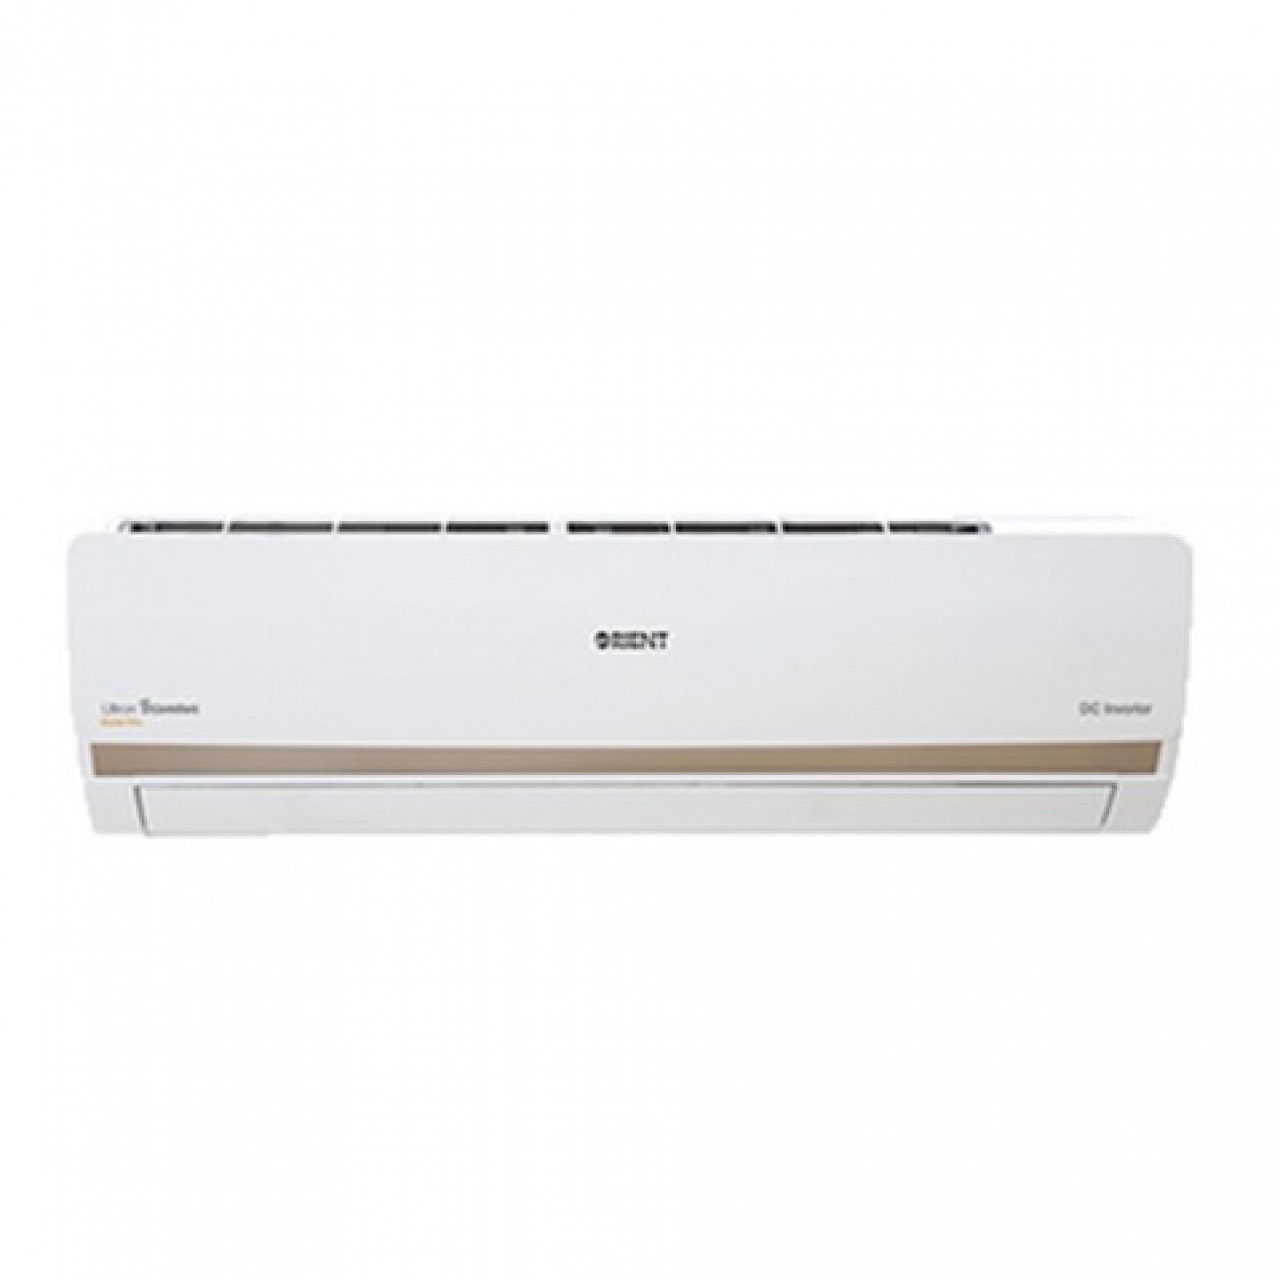 Orient Air Conditioner 18g classic – 1.5 ton – Heat & Cool – Inverter – White